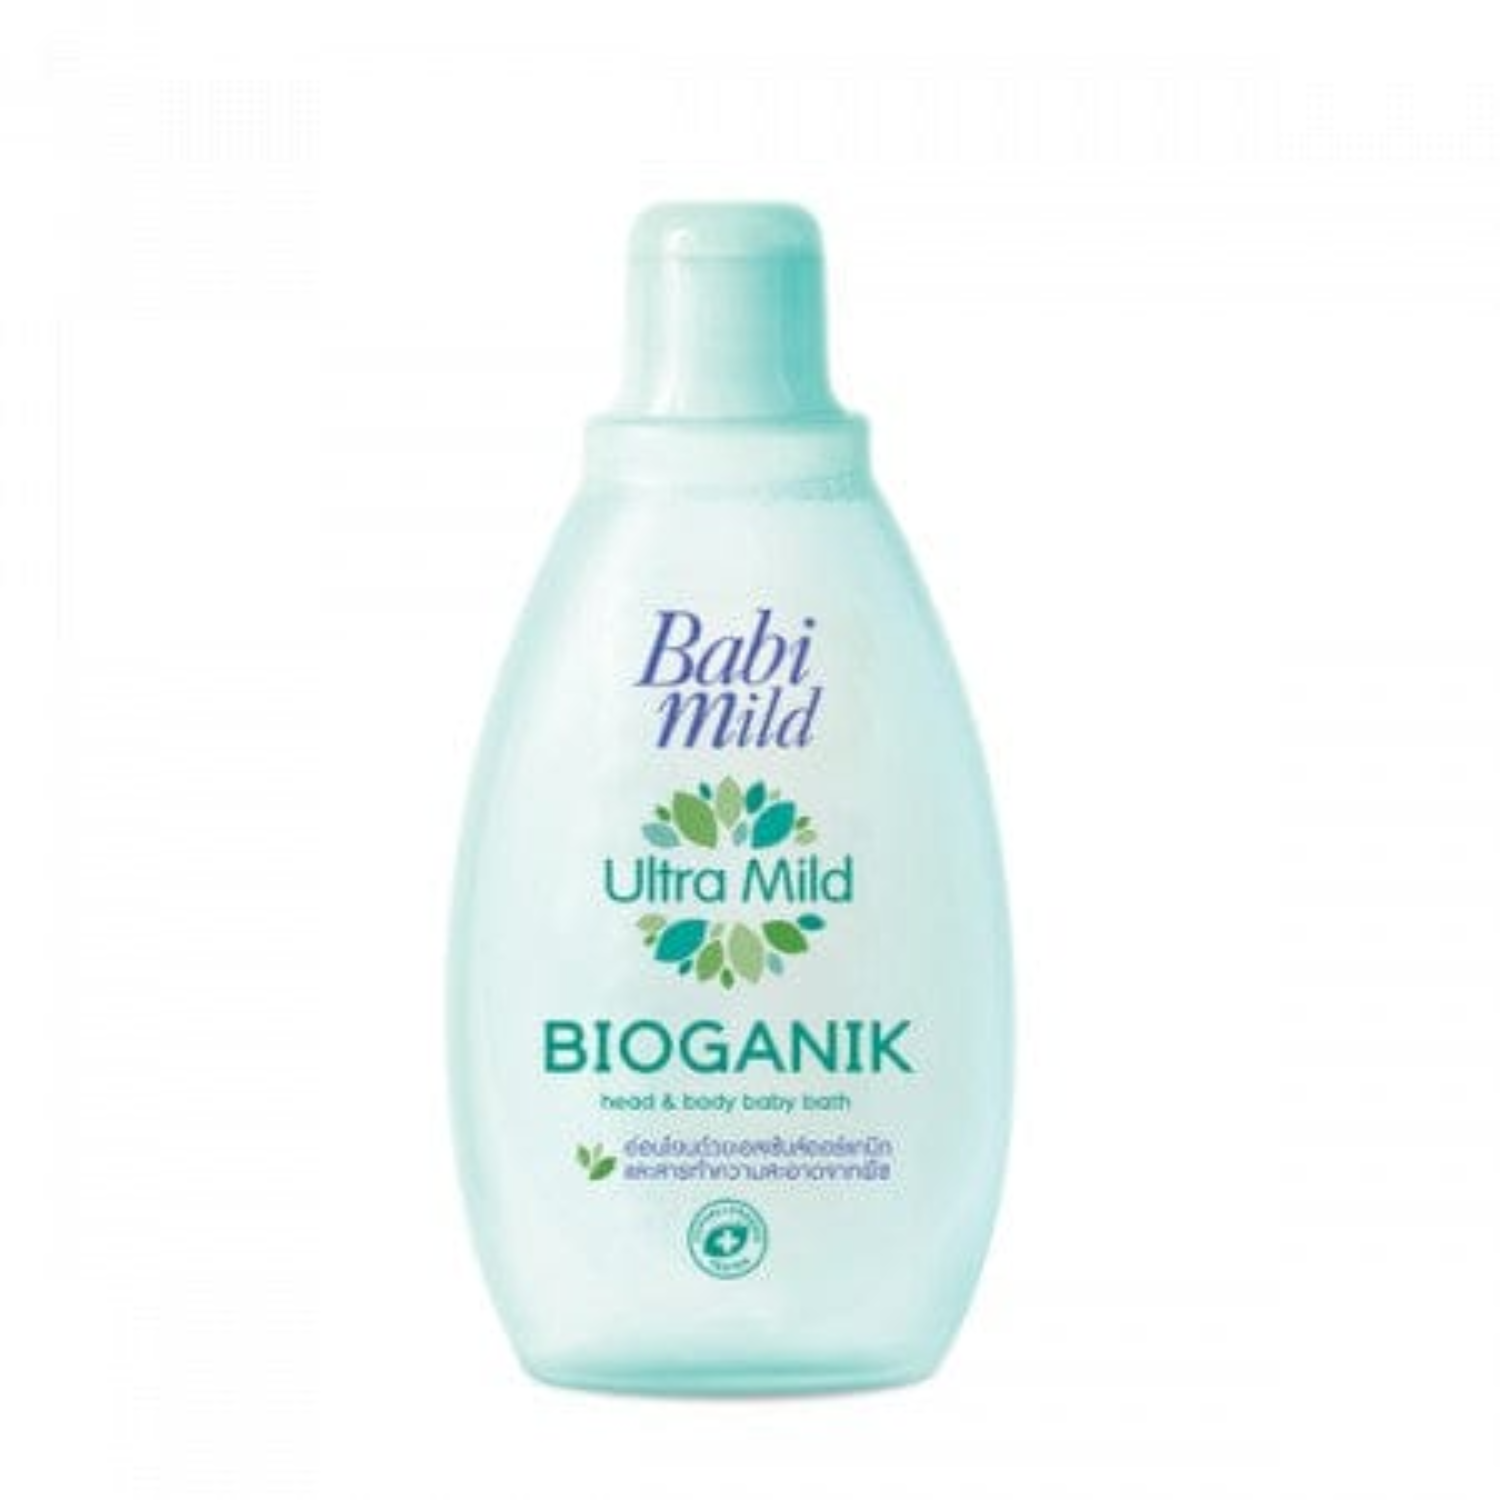 baby-mild-bioganik-ultra-mild-baby-bath-200ml